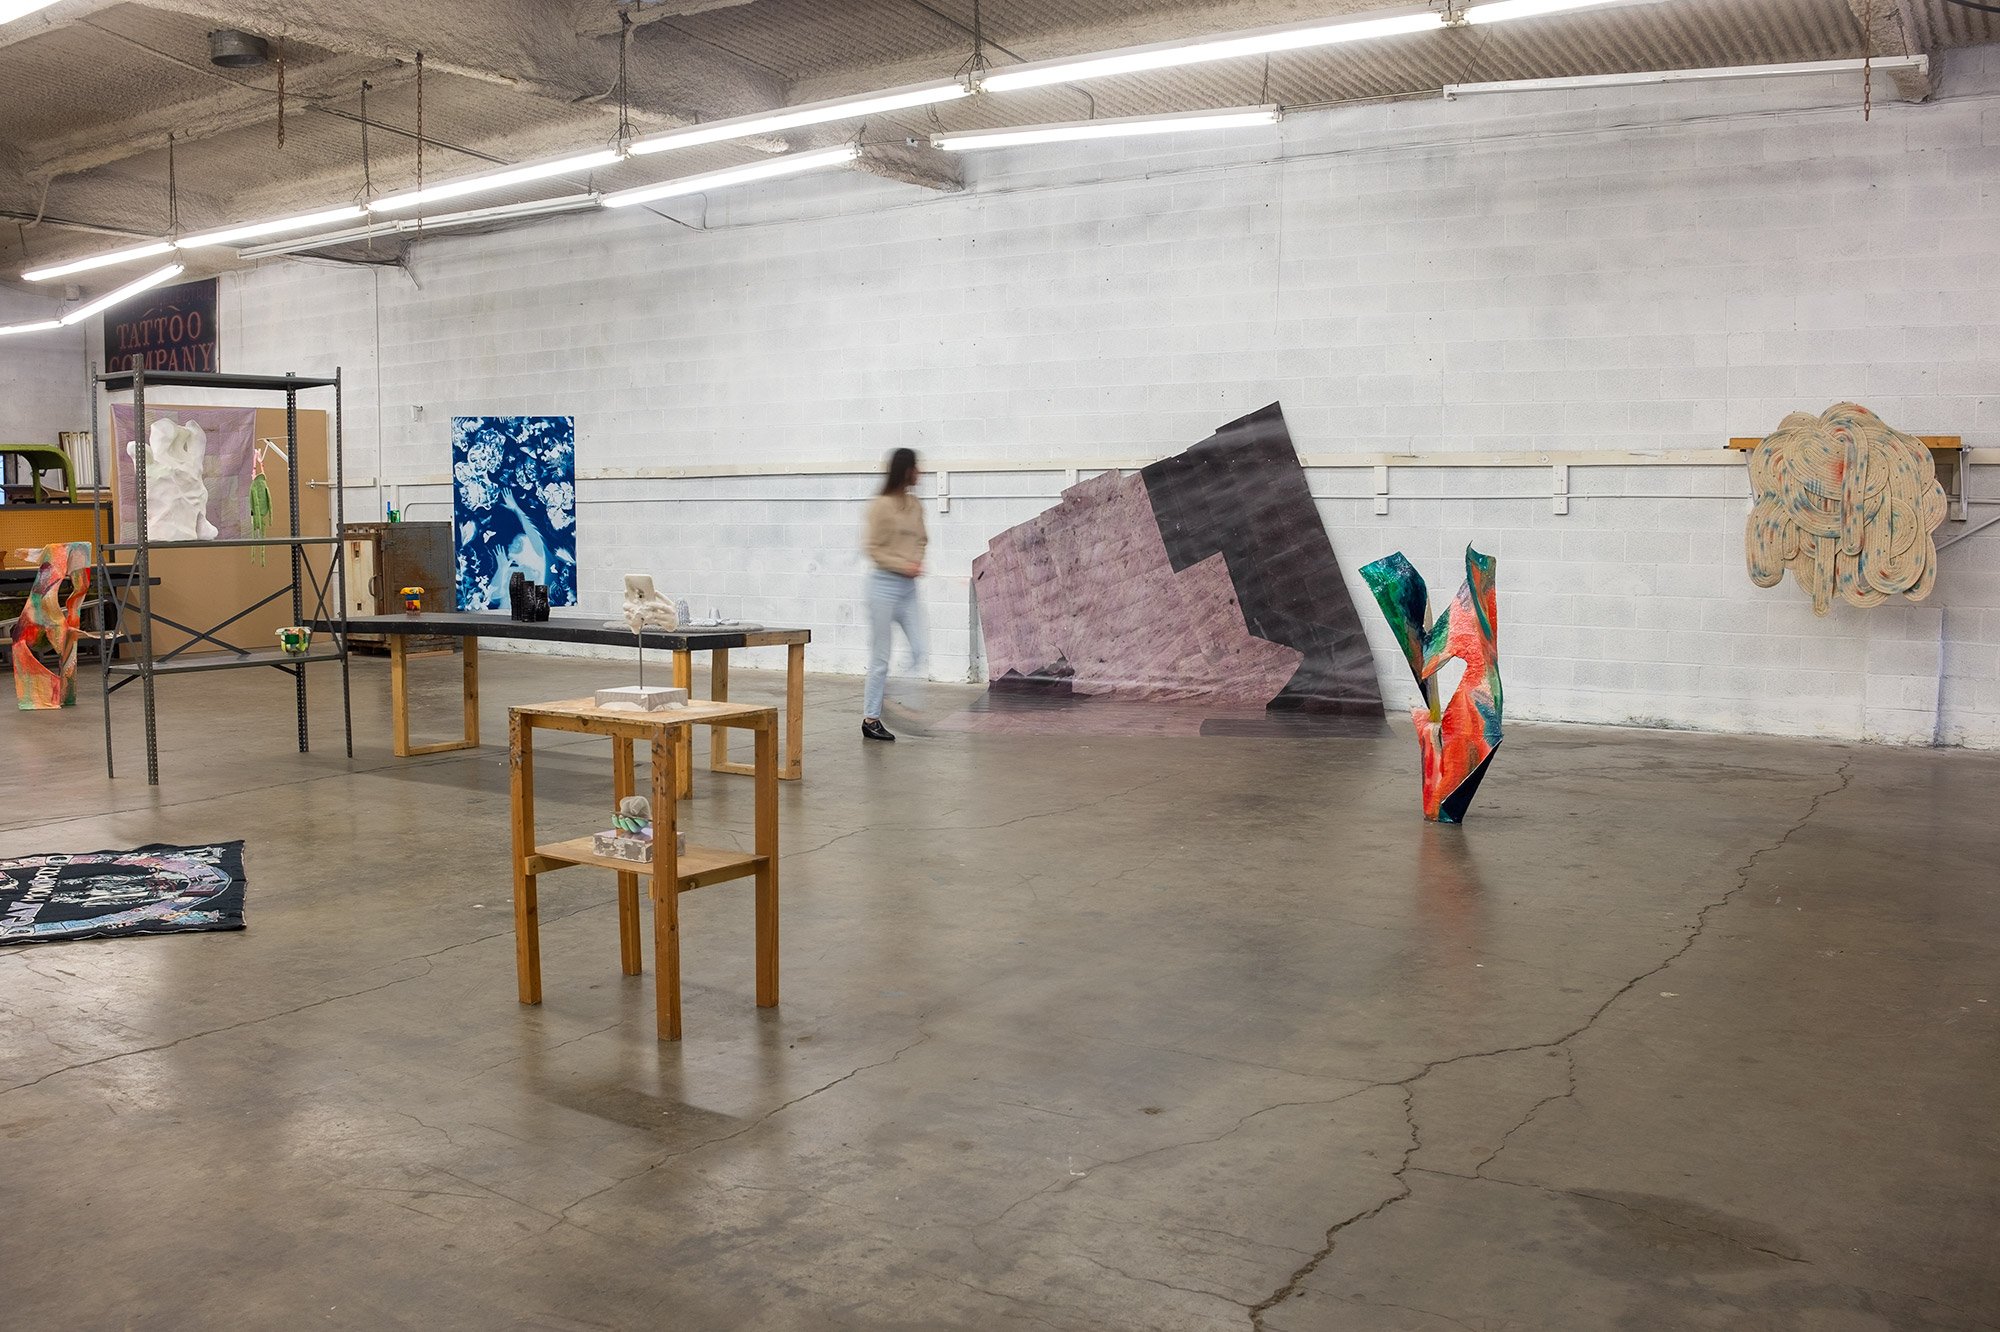  Installation view: Beta Epochs pop up exhibition space in Los Angeles, CA. 